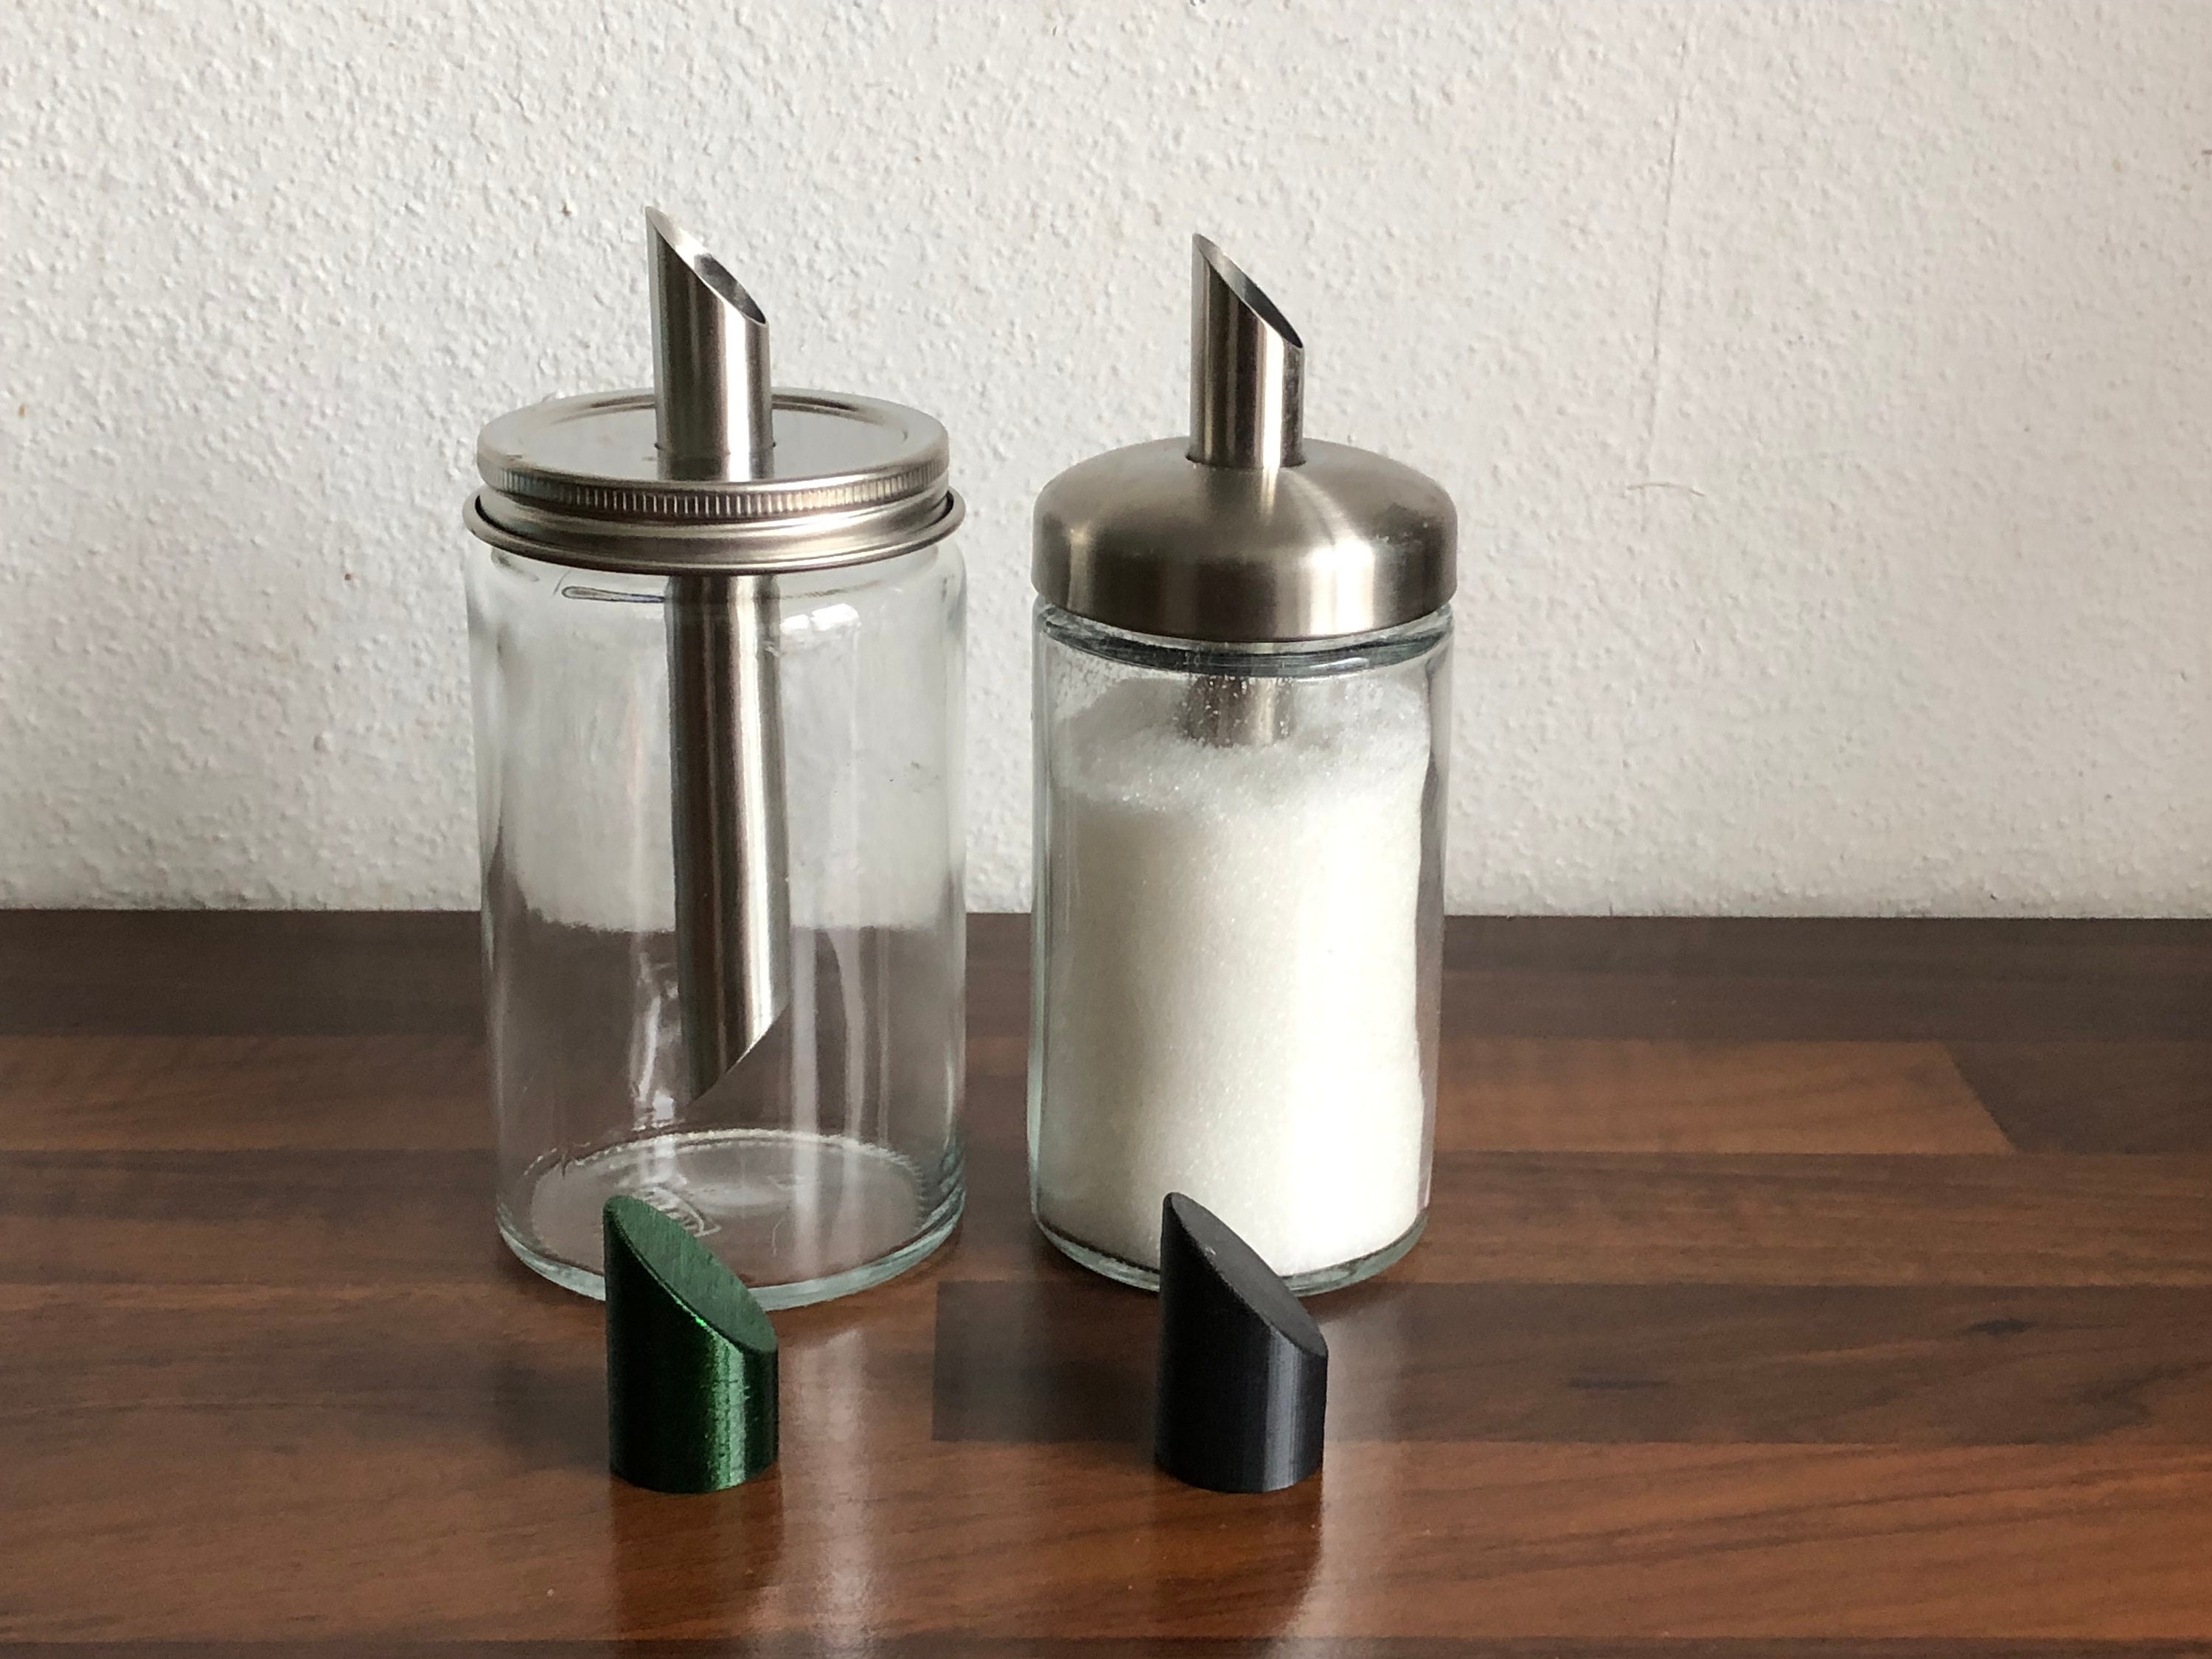 CITRONHAJ Spice jar, clear glass/stainless steel, 12 oz - IKEA